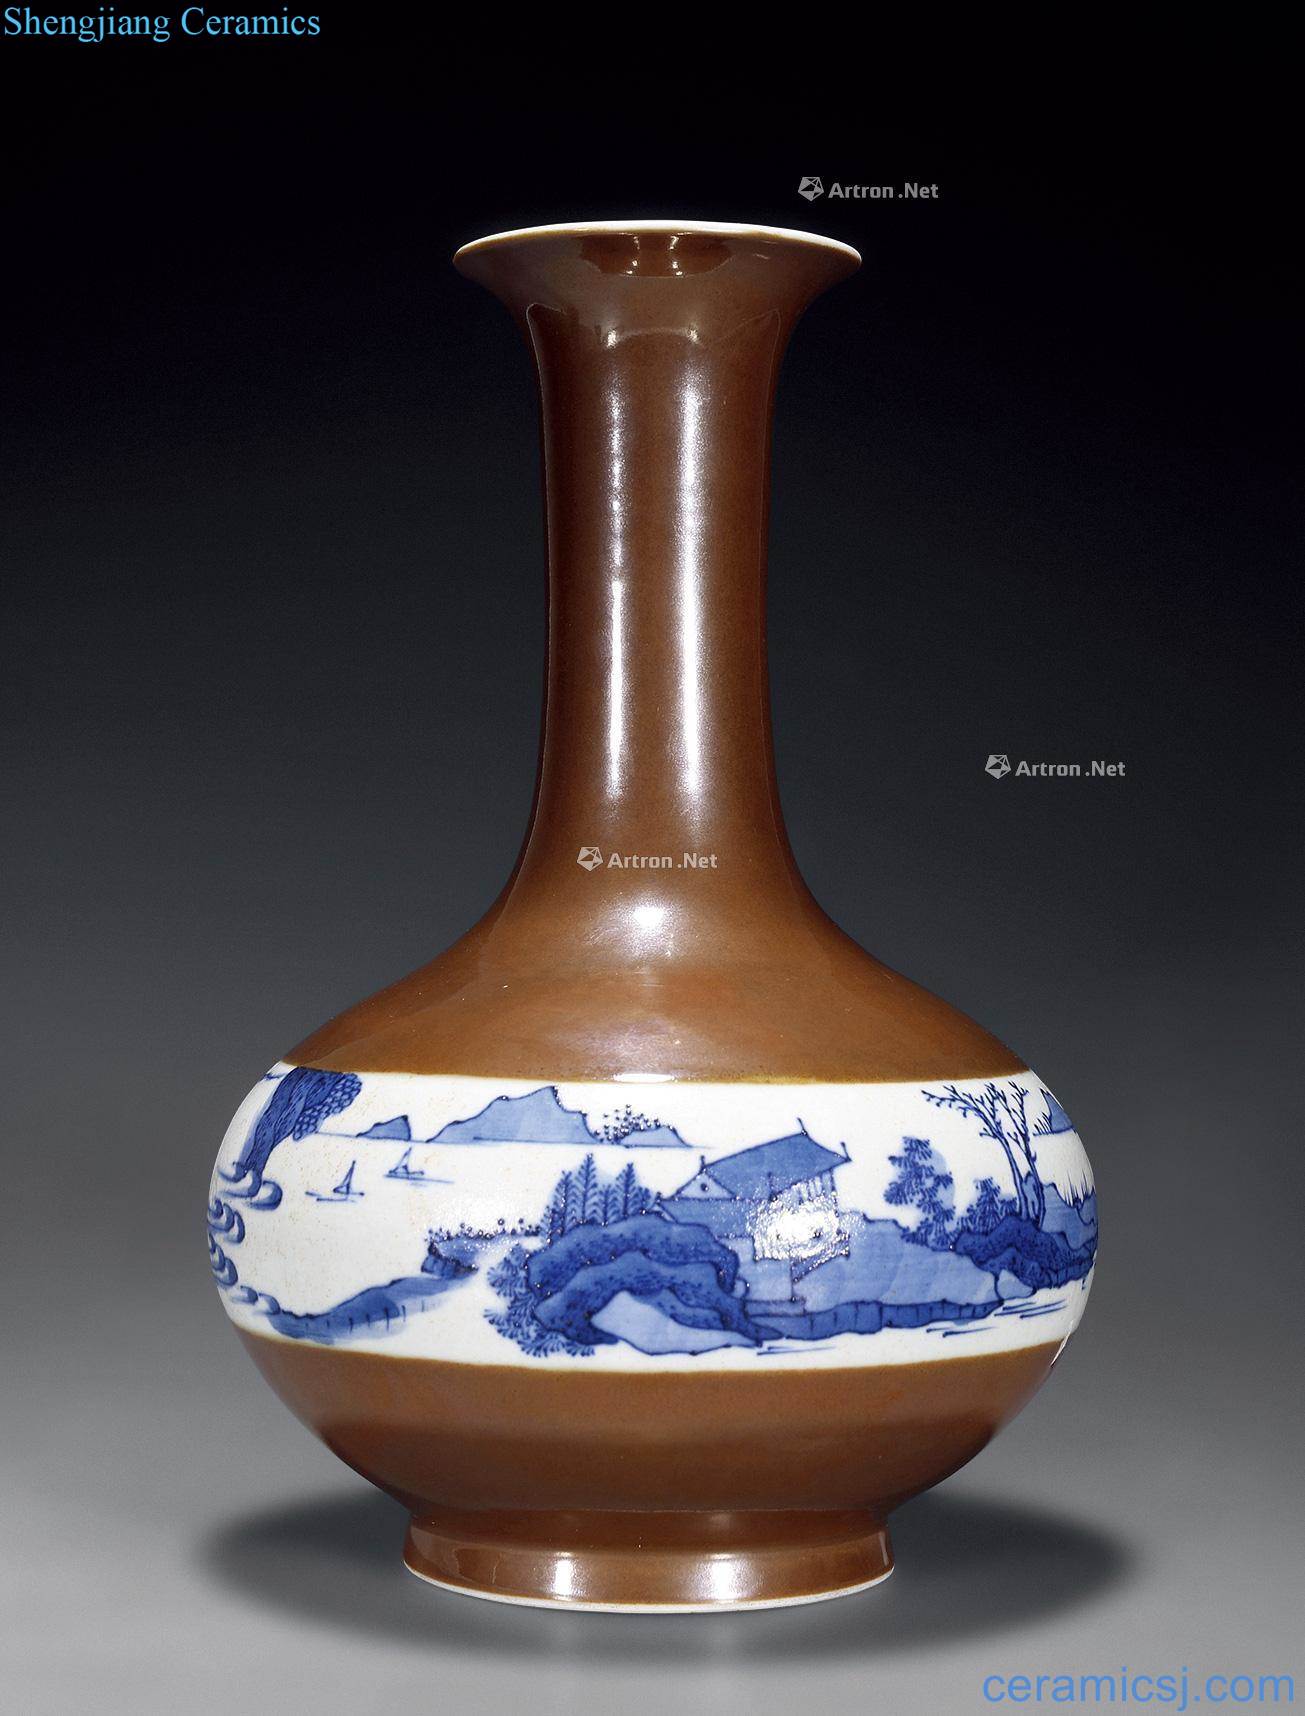 Qing sauce glaze medallion blue and white landscape pattern design